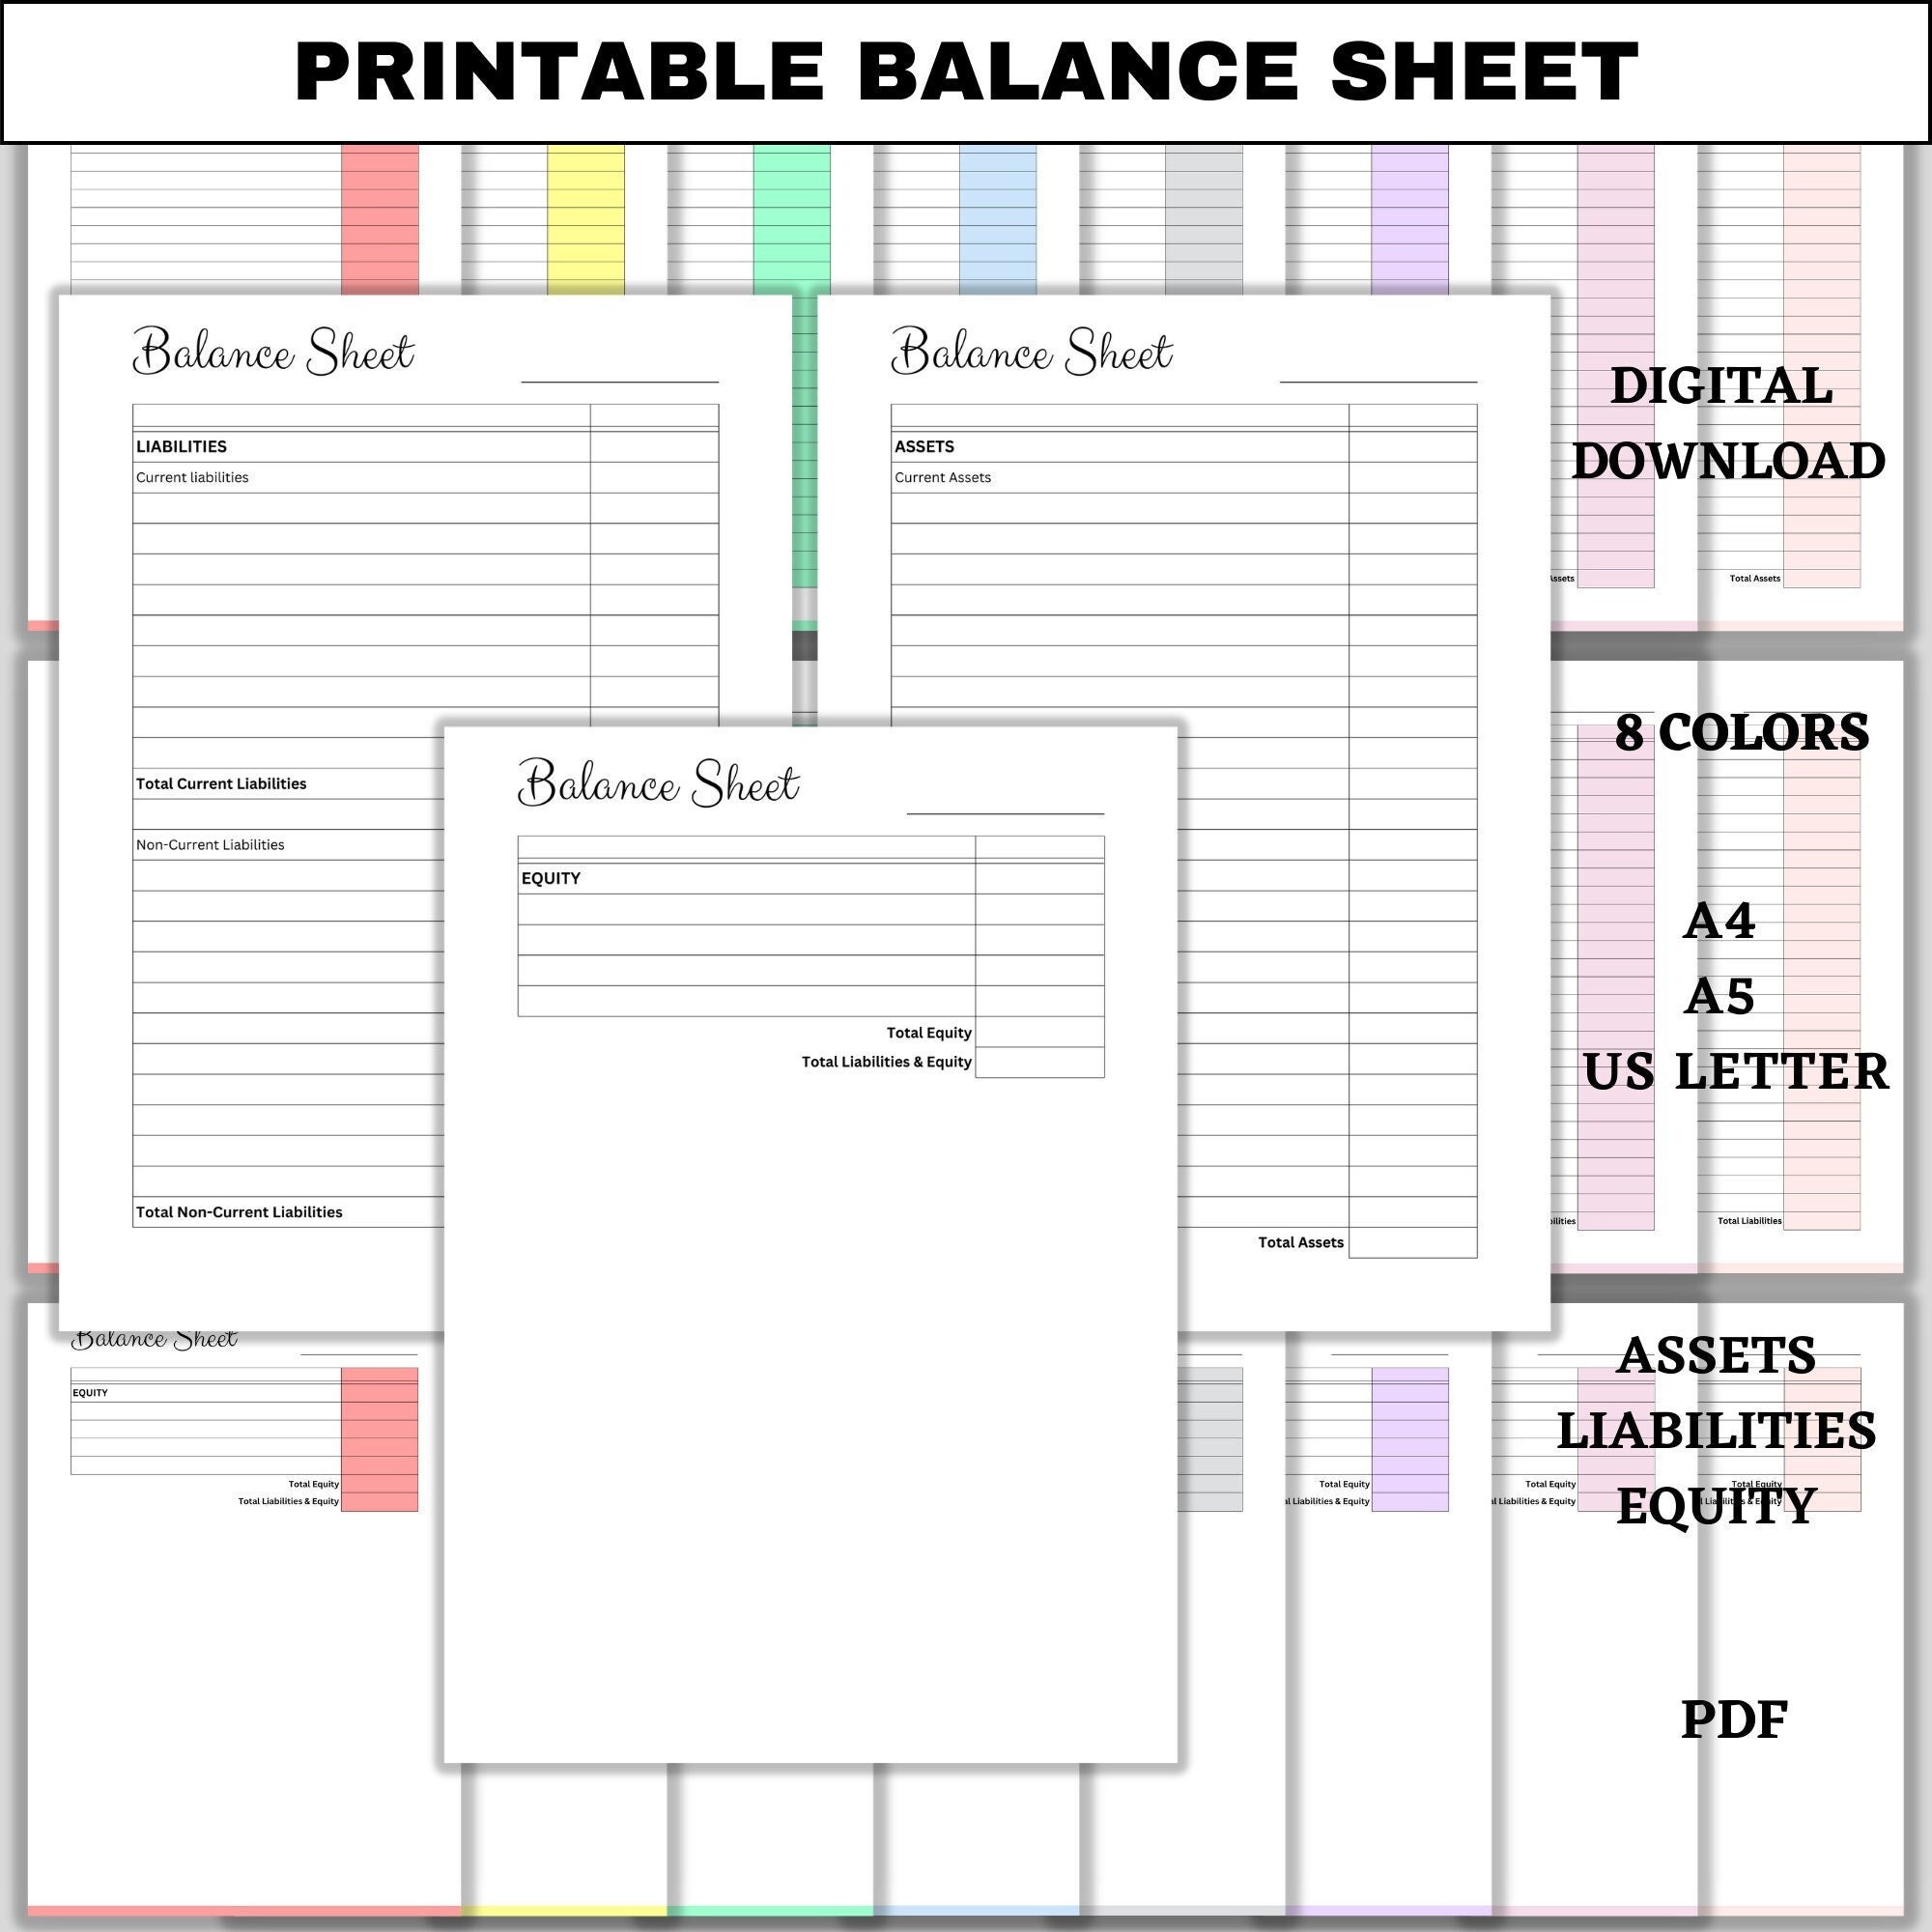 Printables Archives - Bilingual Balance